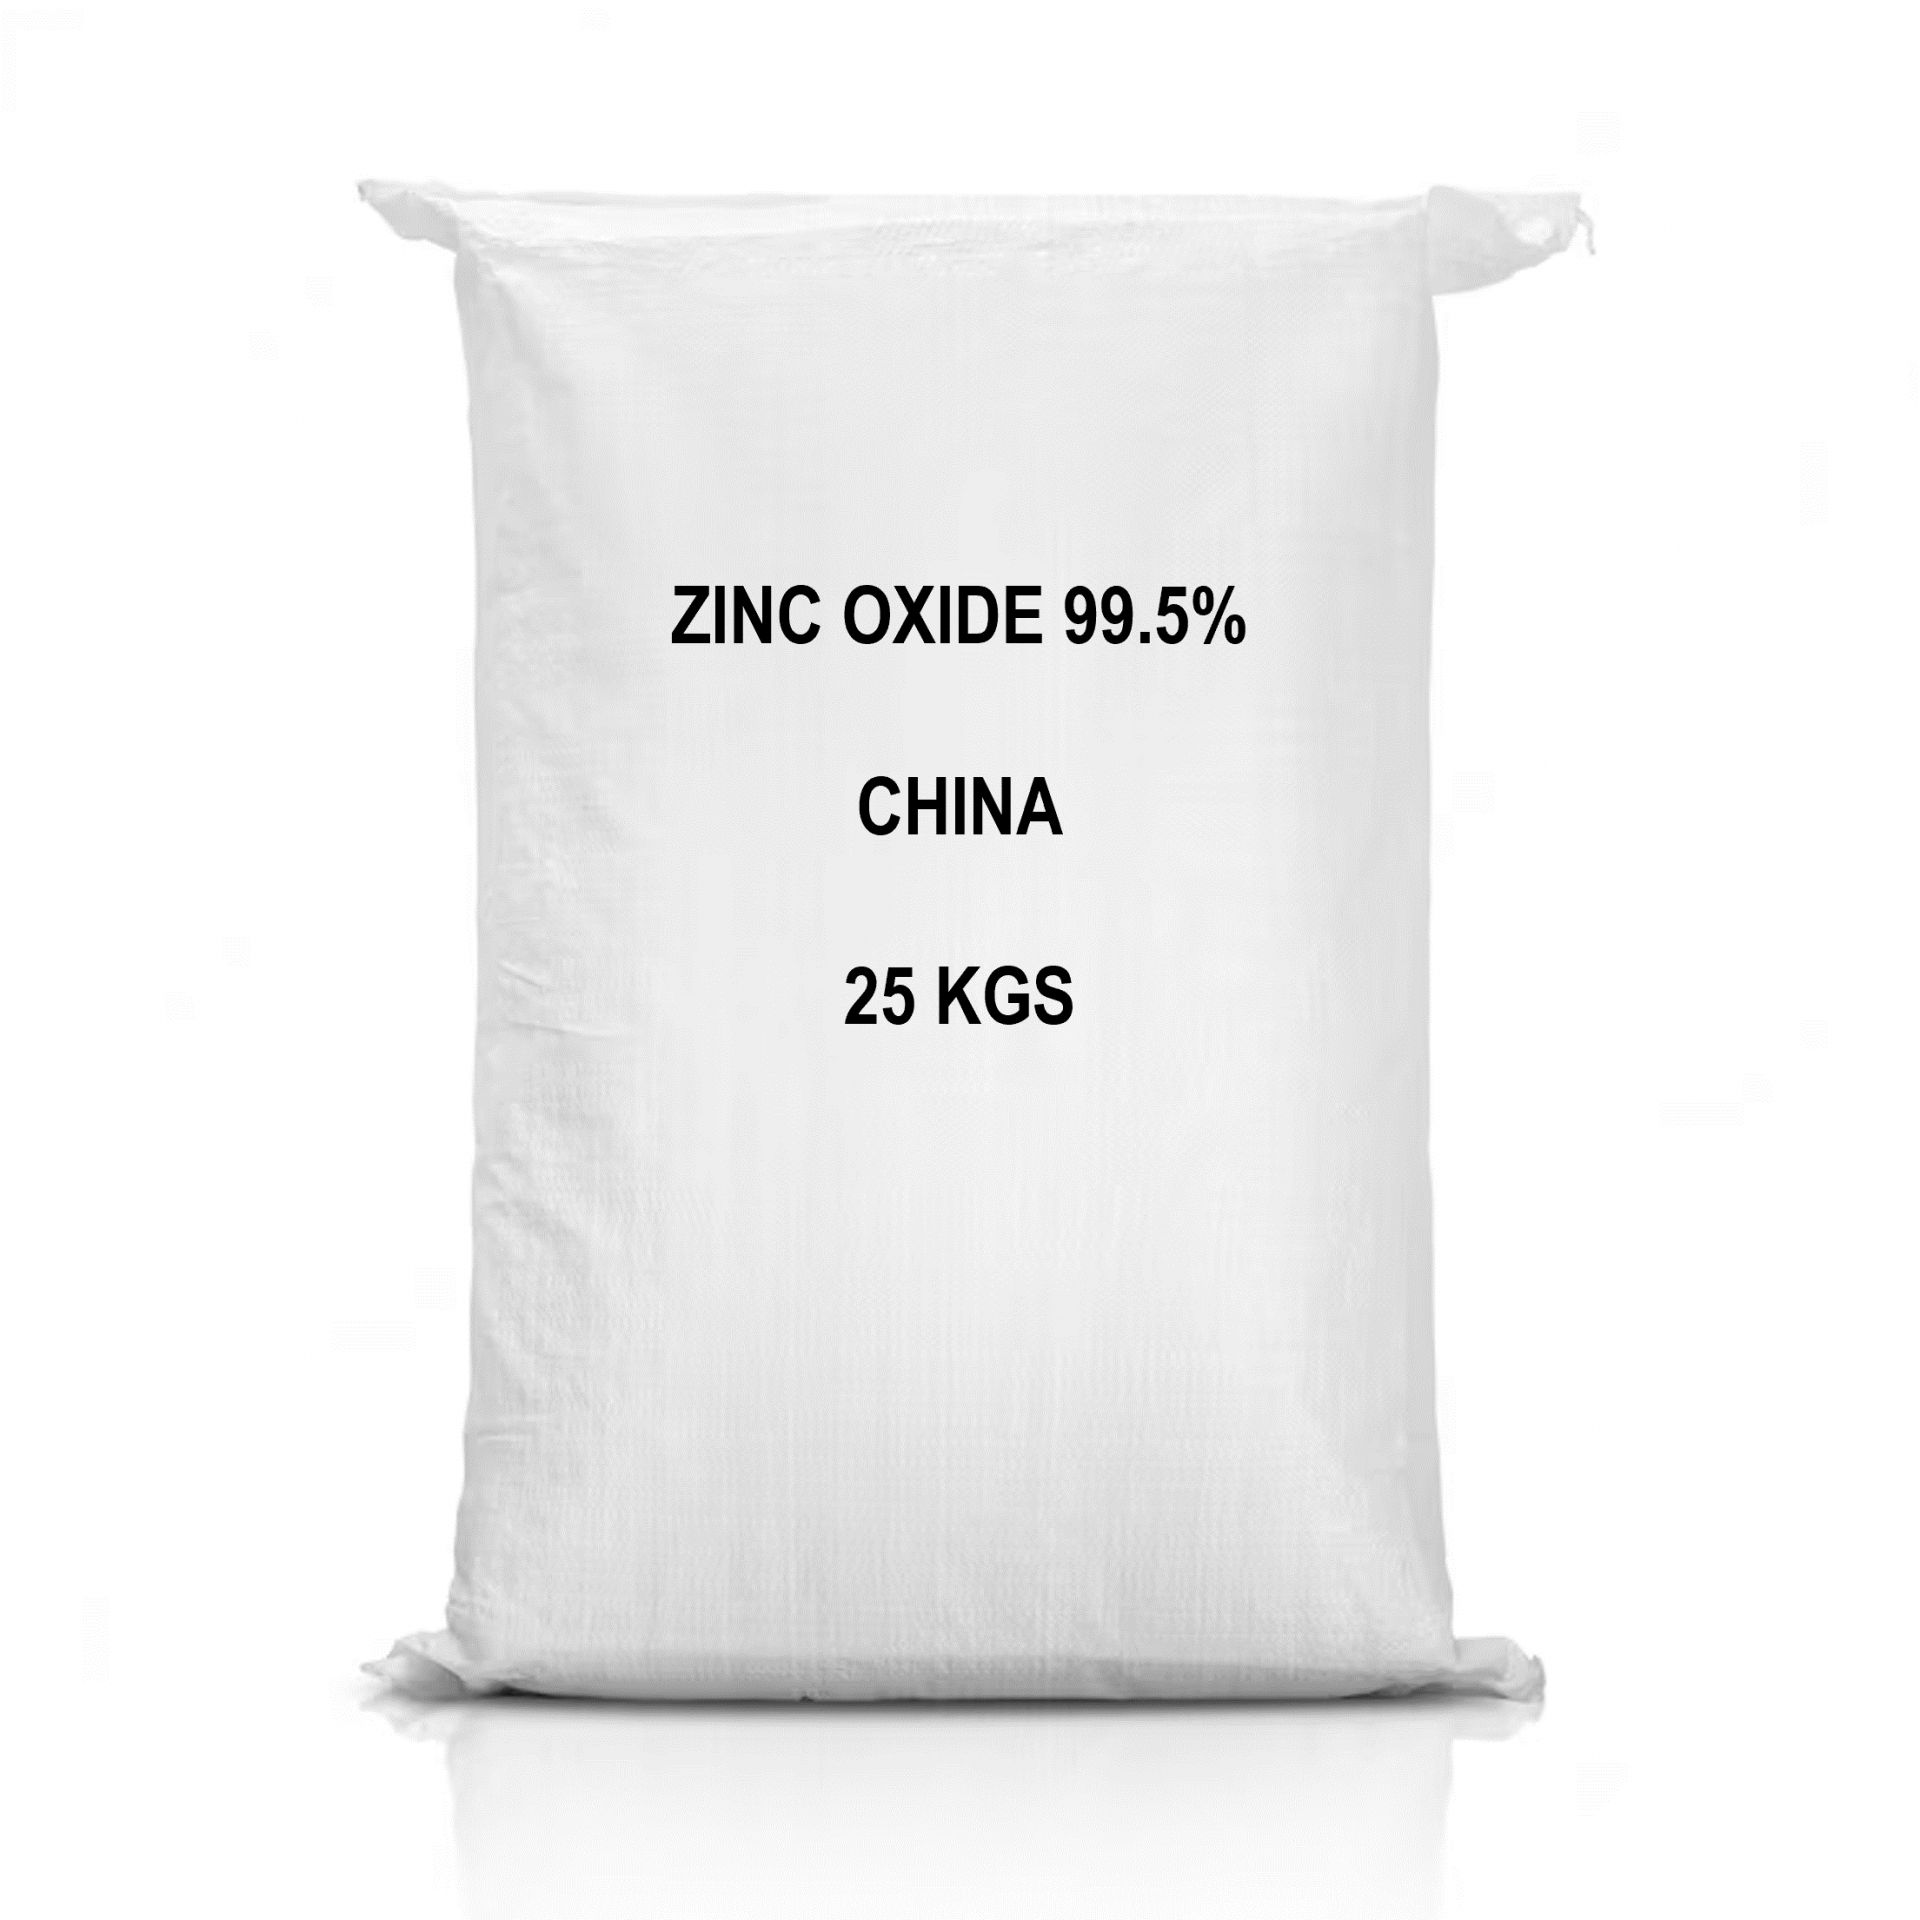 ZINC OXIDE 99.5%